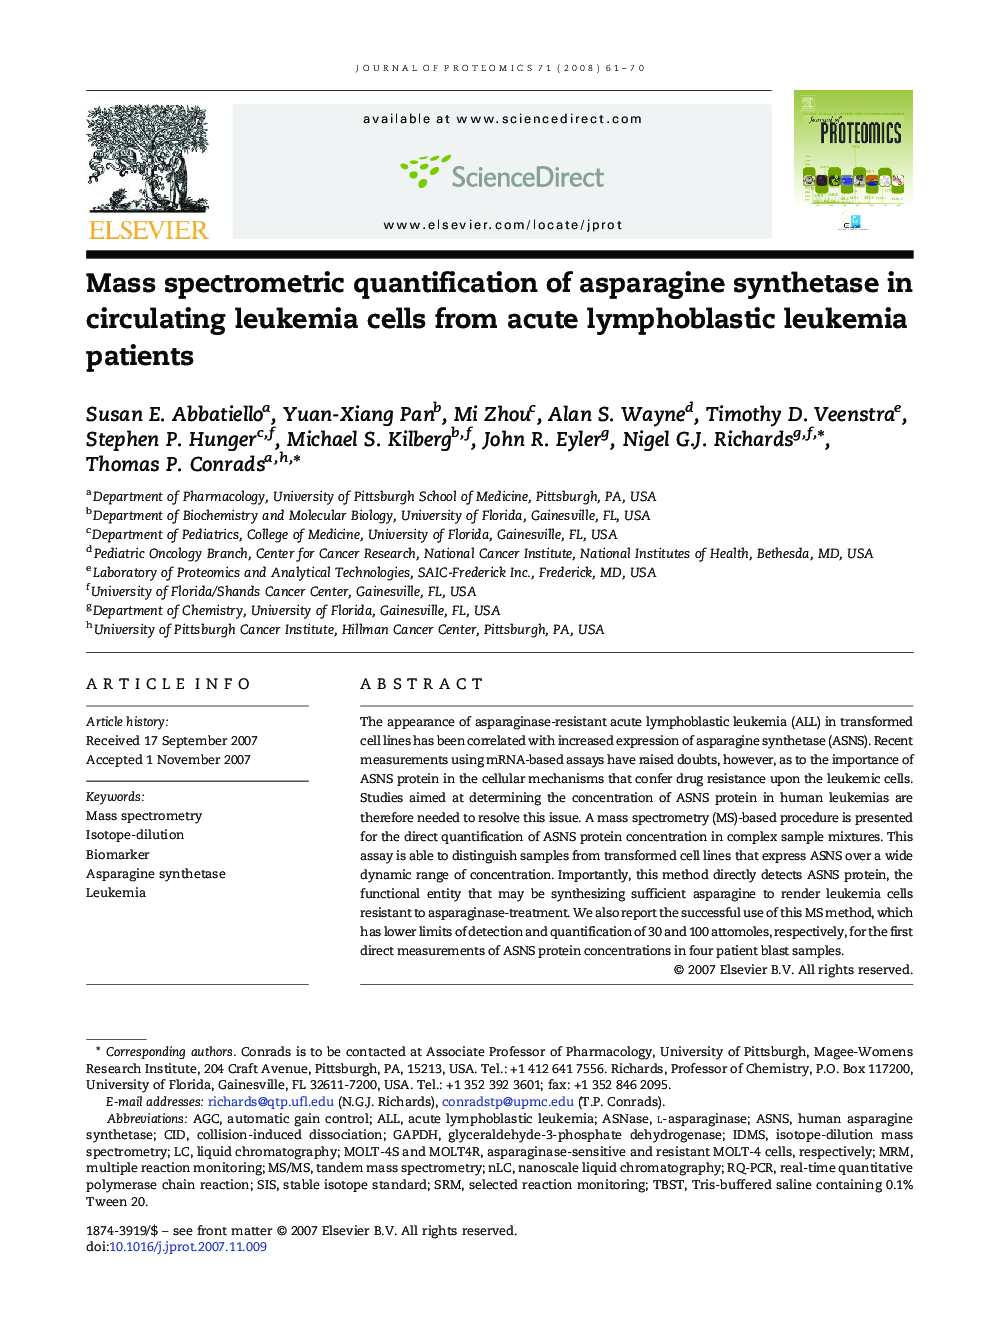 Mass spectrometric quantification of asparagine synthetase in circulating leukemia cells from acute lymphoblastic leukemia patients